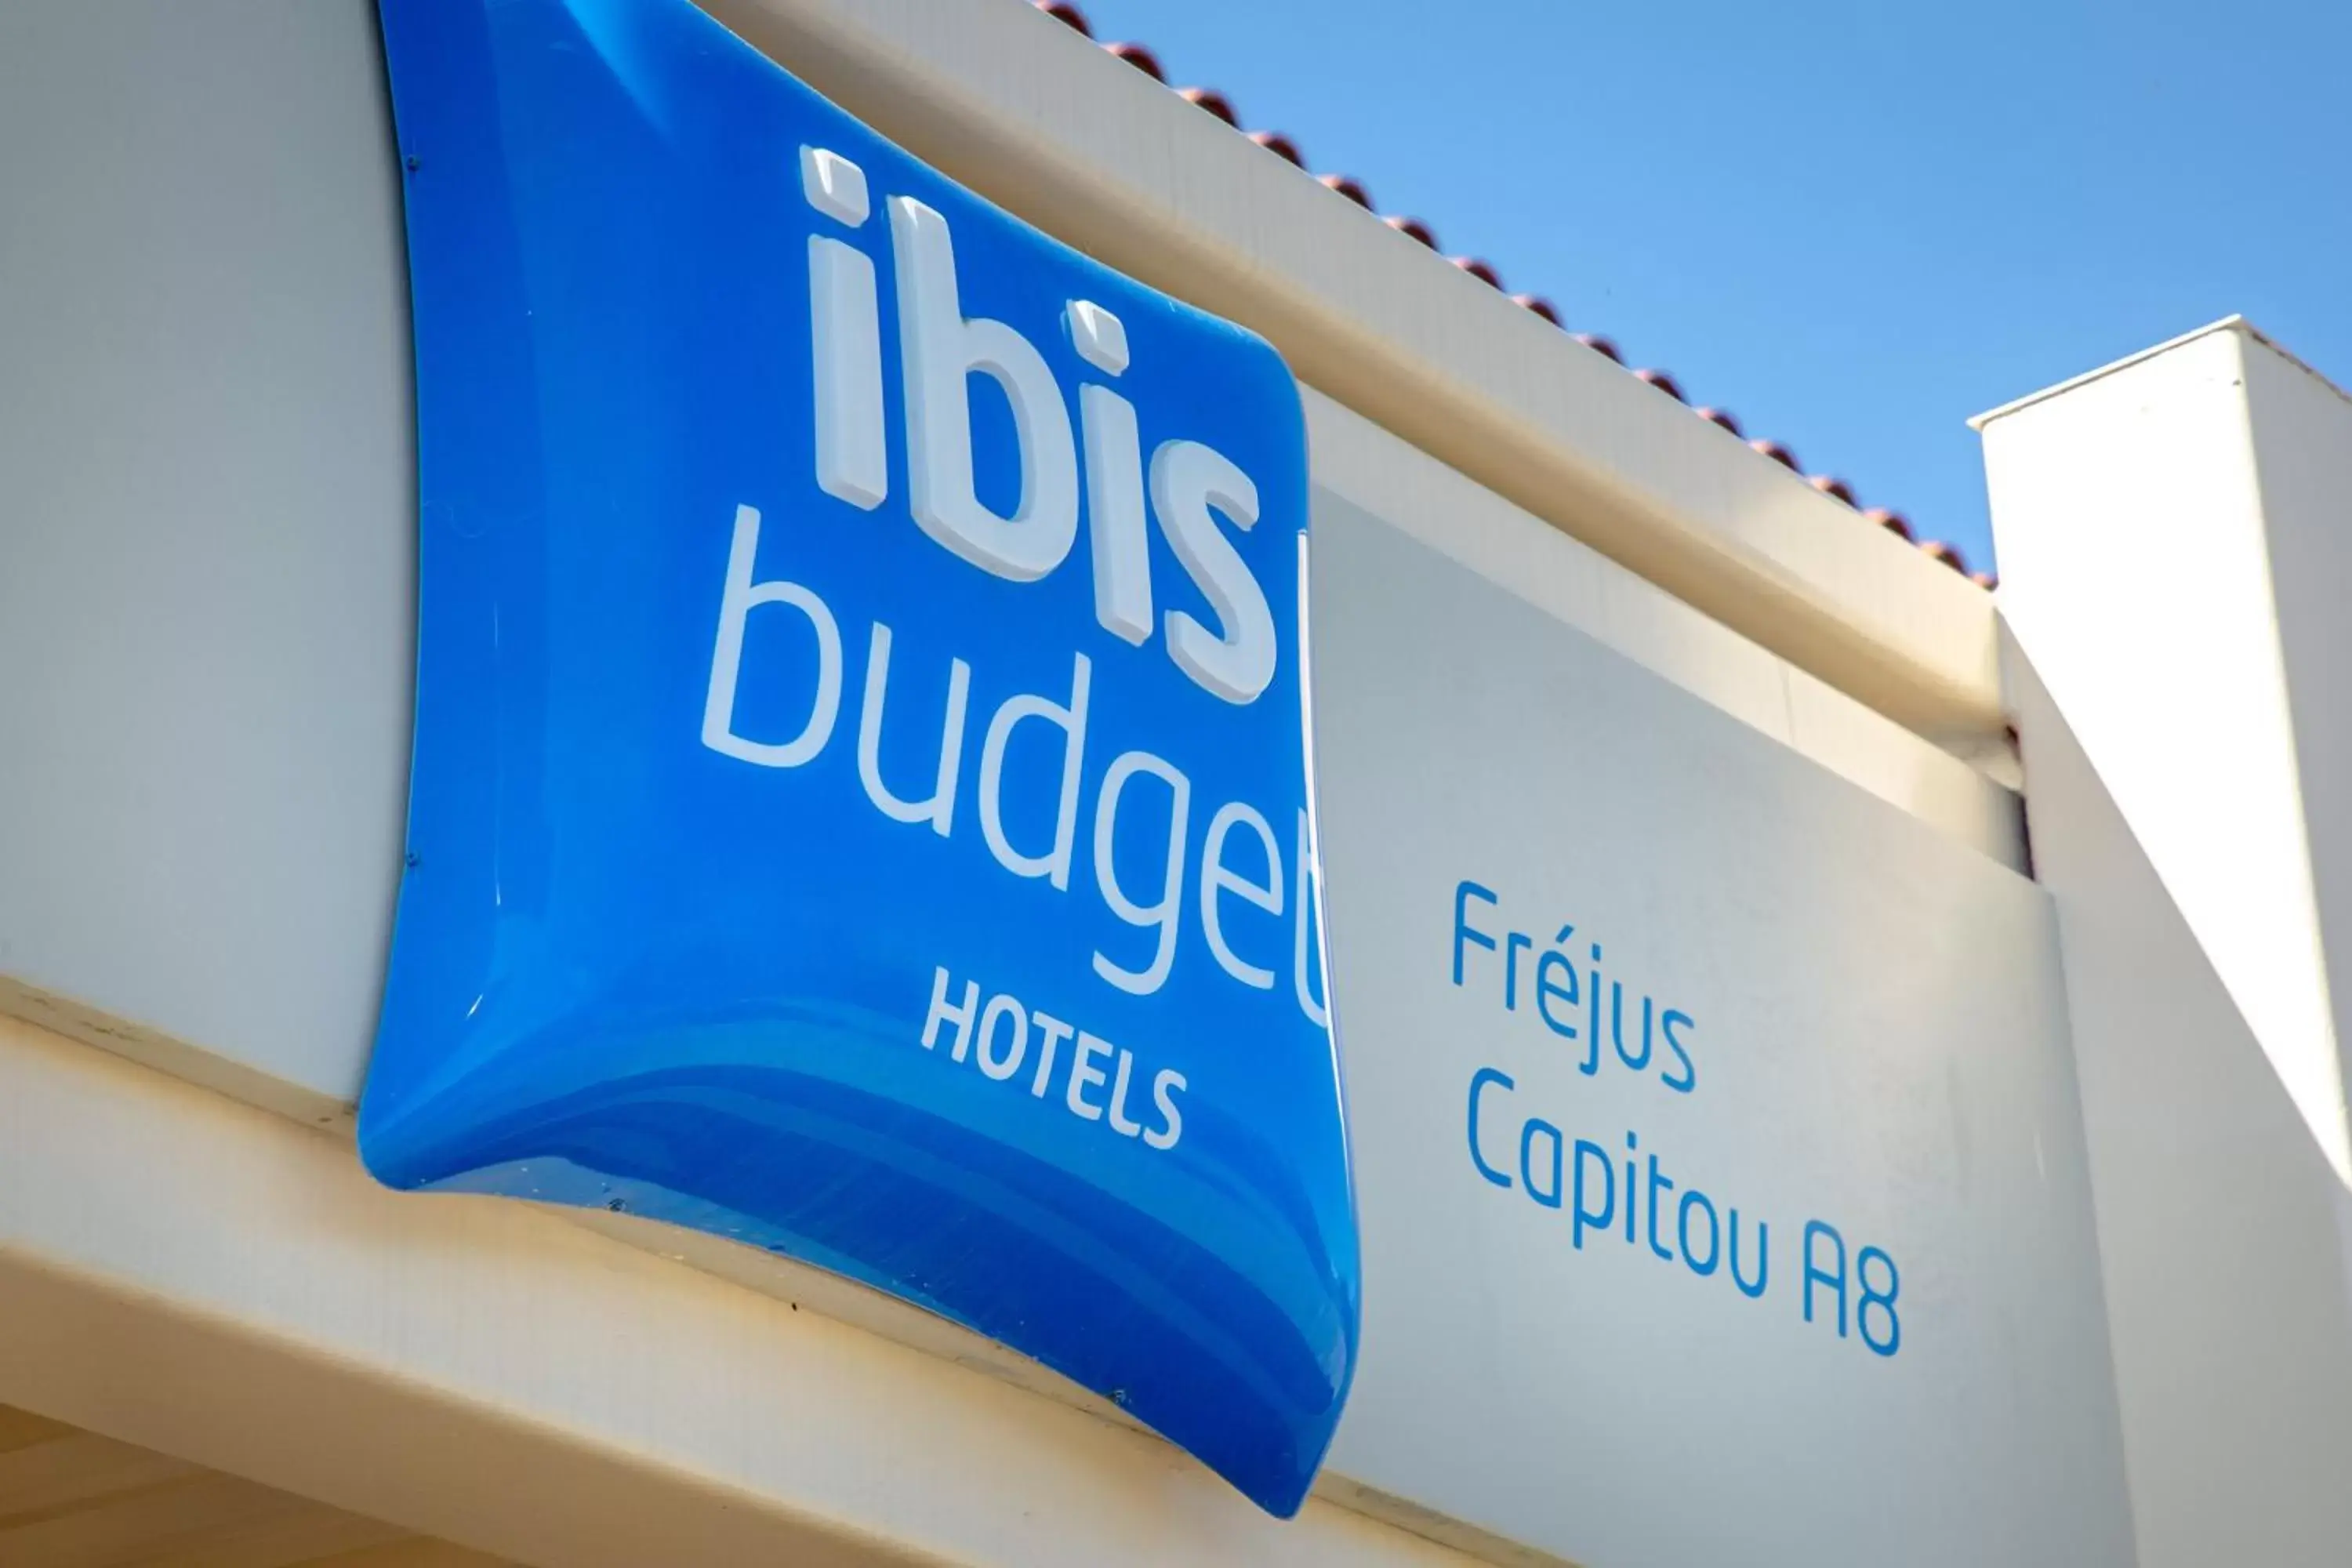 Property building in Ibis Budget Fréjus Capitou